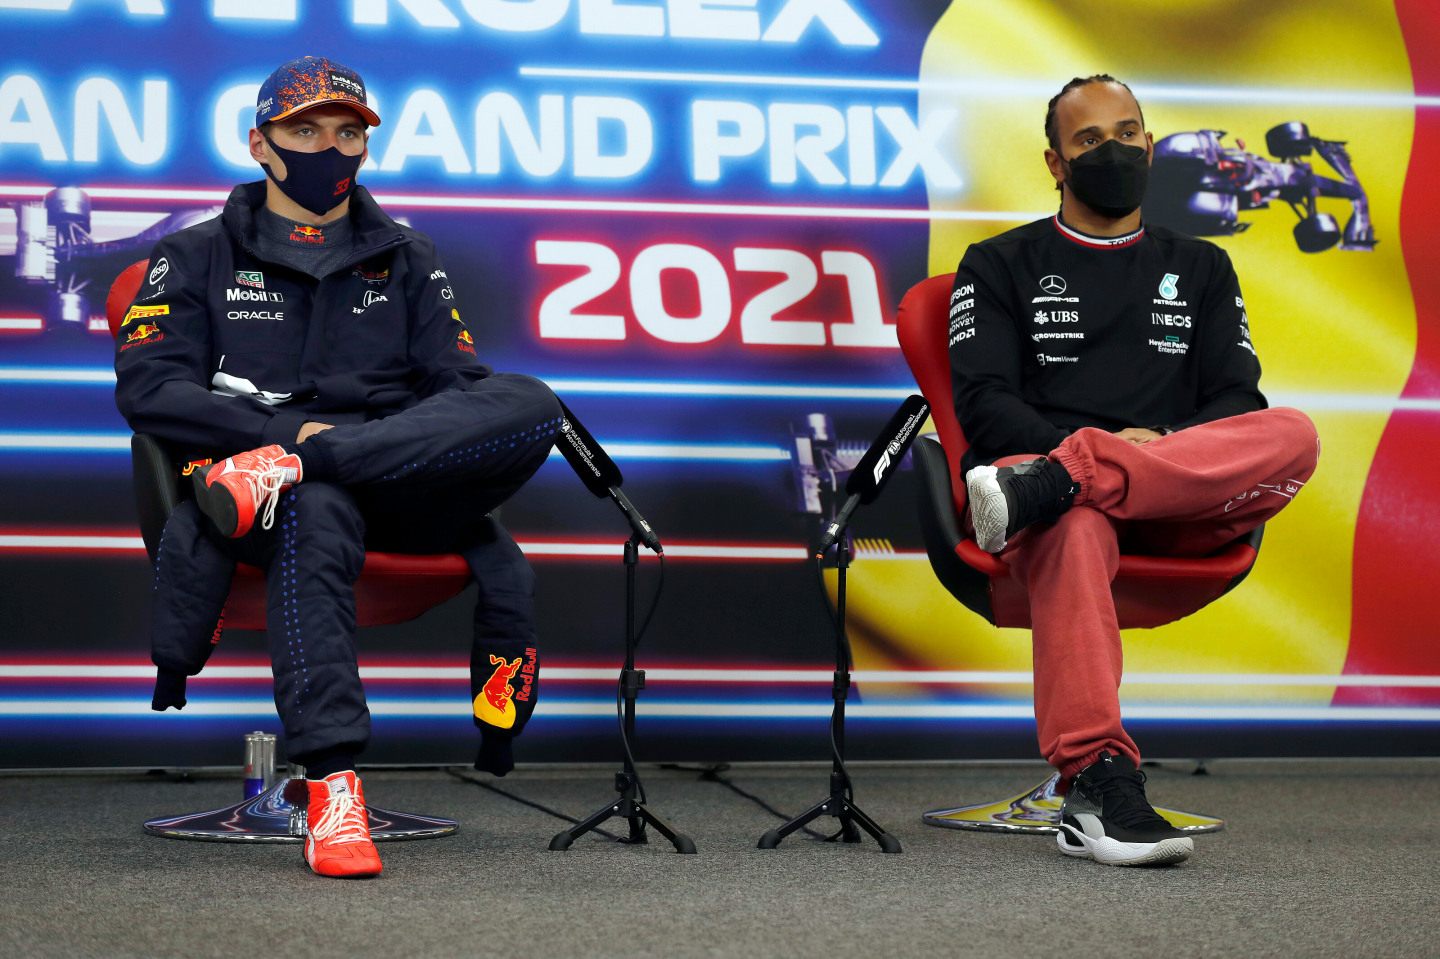 Макс Ферстаппен и Льюис Хэмилтон на пресс-конференции после квалификации © Red Bull Content Pool